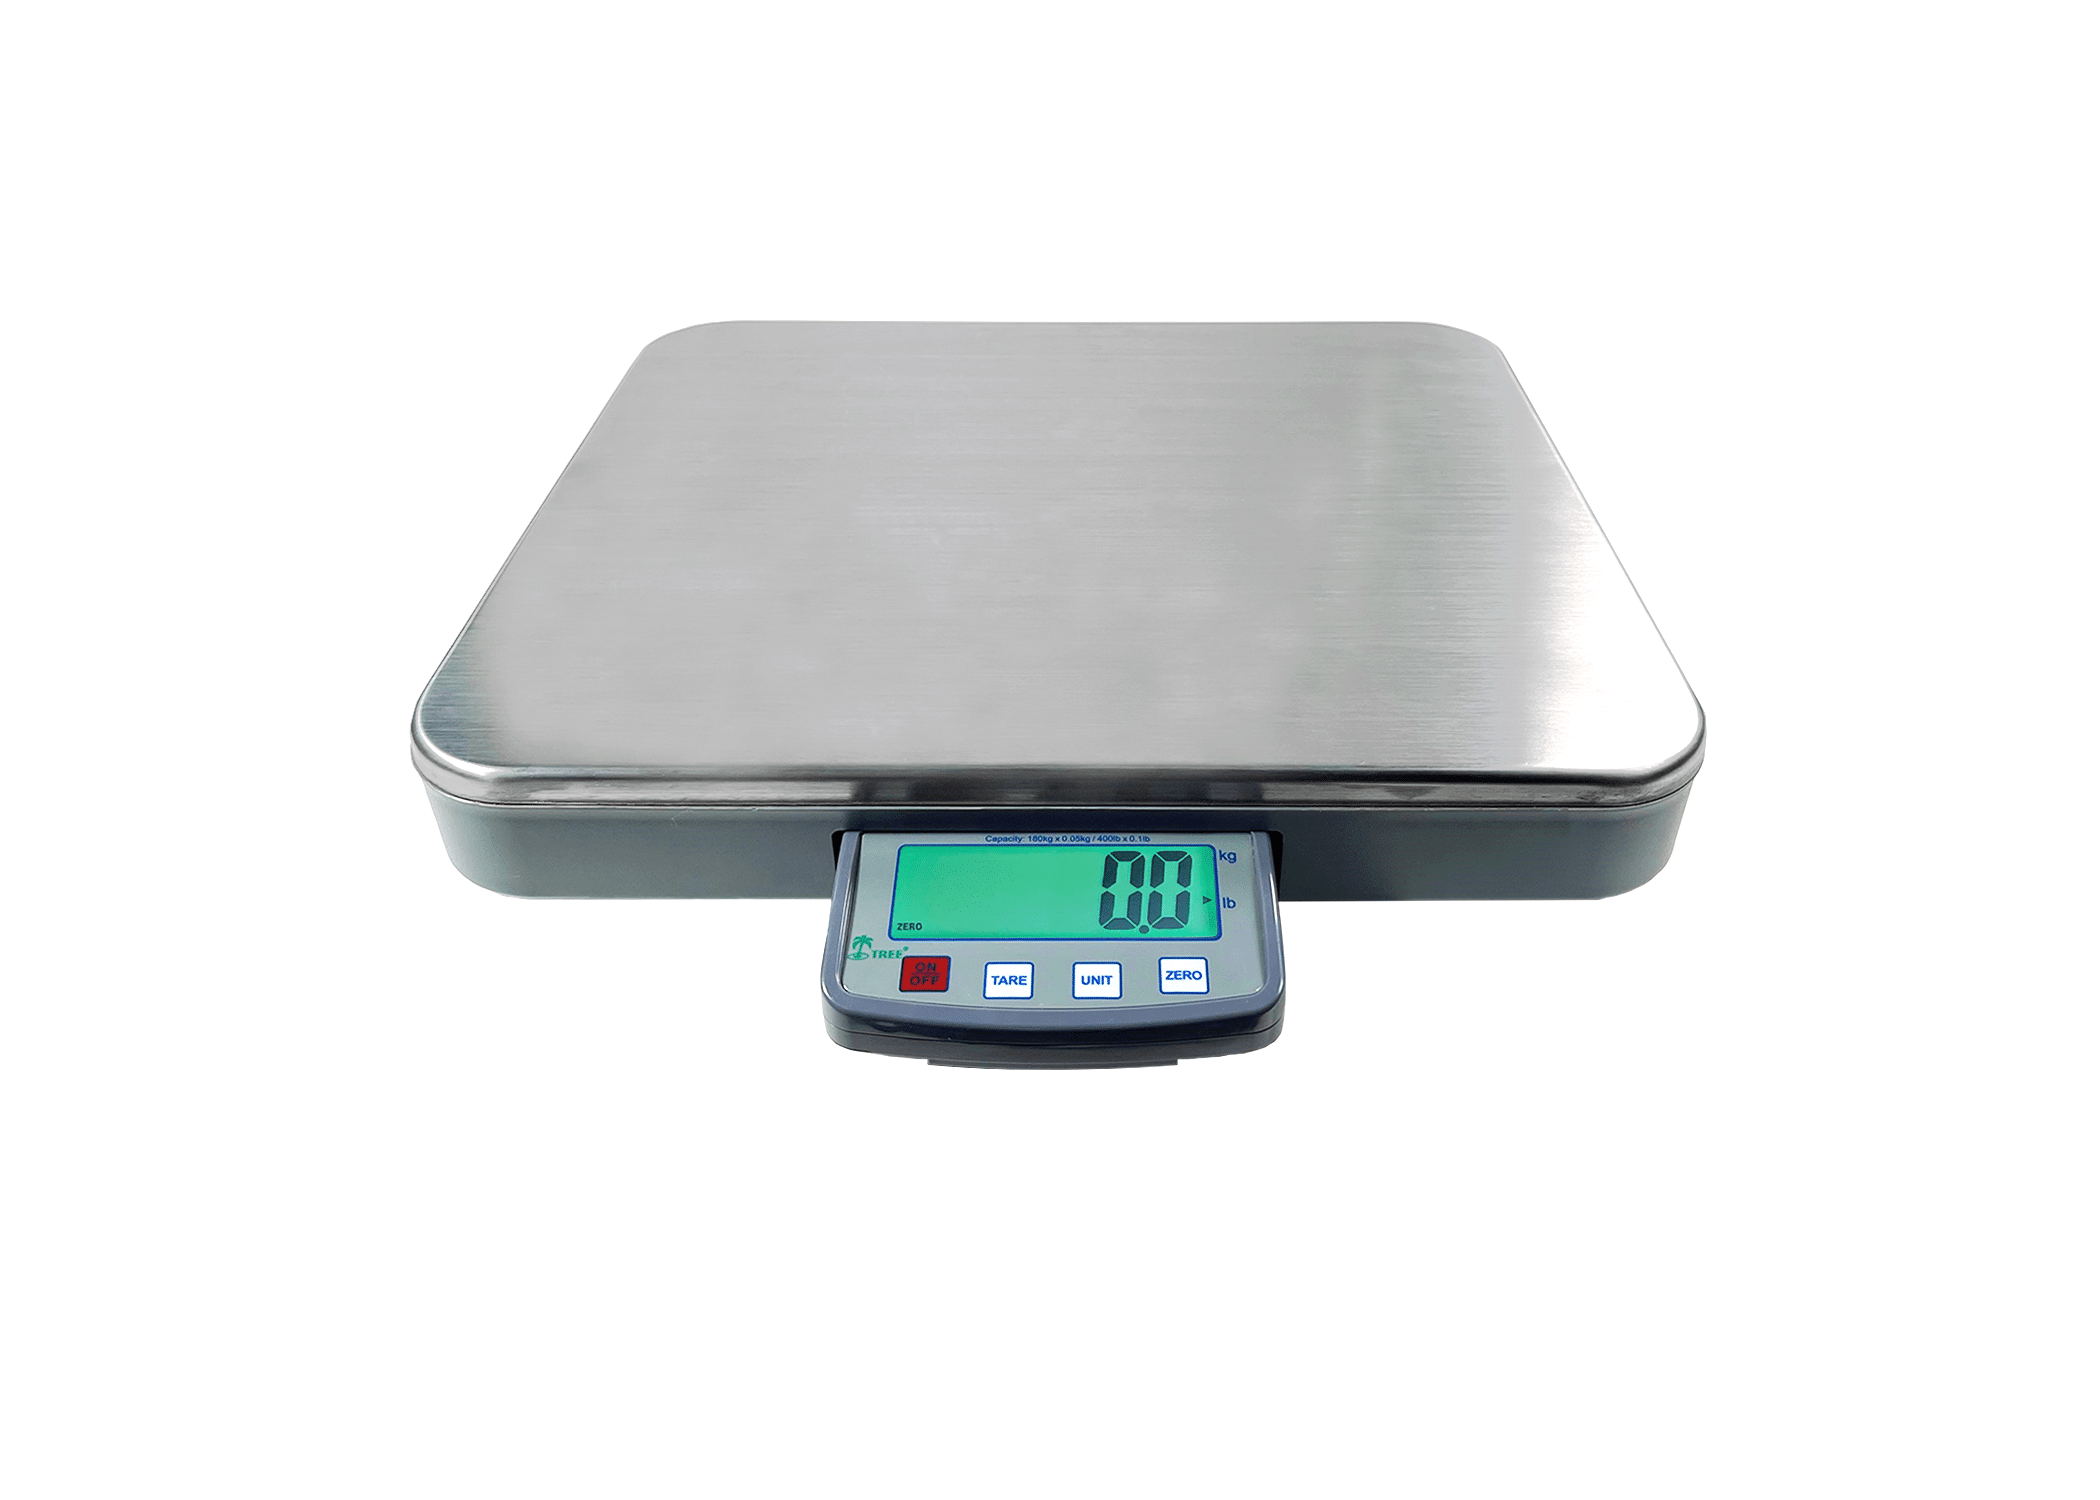 Digital Vet Small Animal Scale 400 lb. Capacity